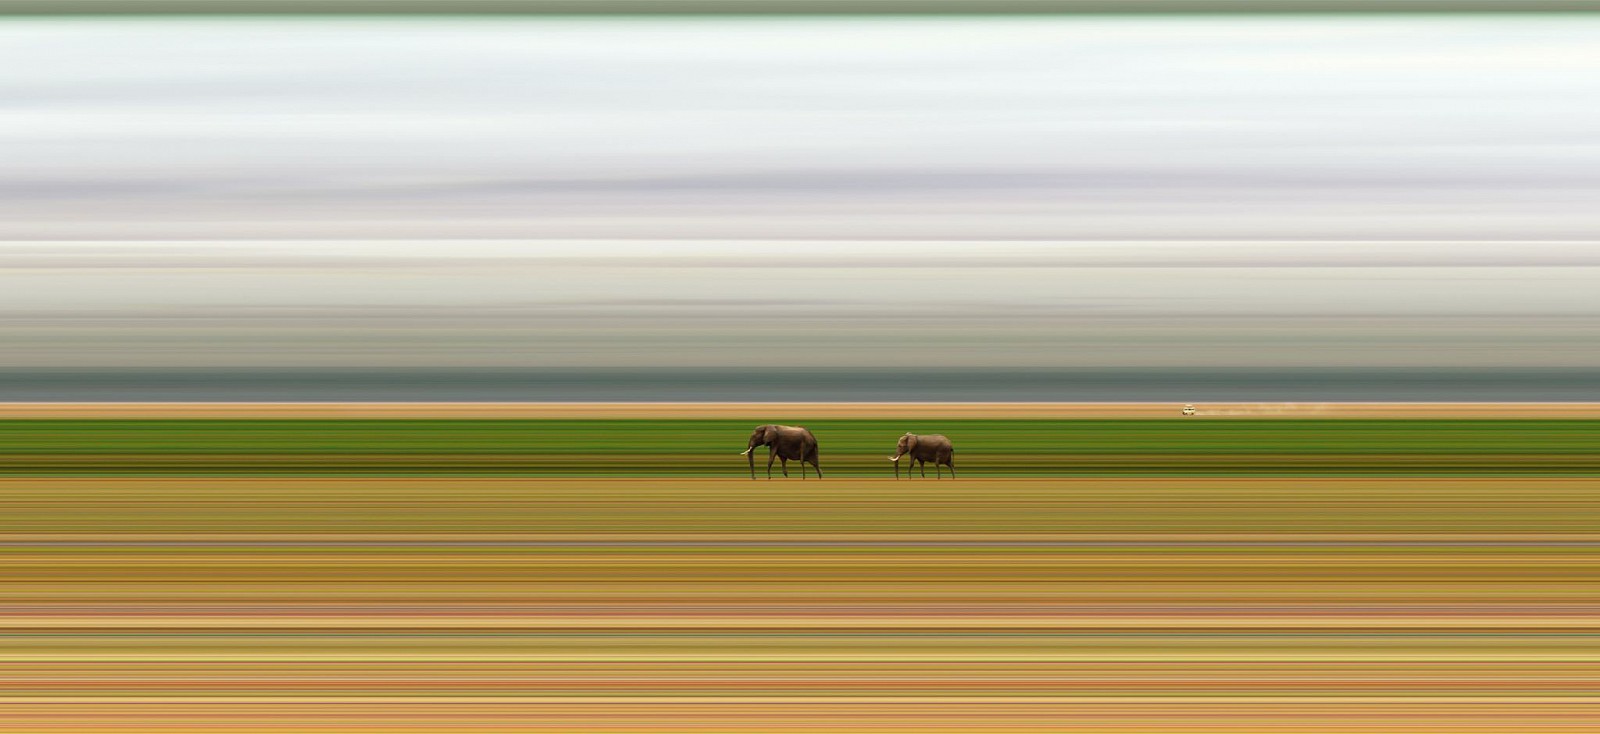 Jay Mark Johnson, AMBOSELI #126, 2014 Amboseli
archival pigment on paper, mounted on aluminum, 40 x 88 in. (101.6 x 223.5 cm)